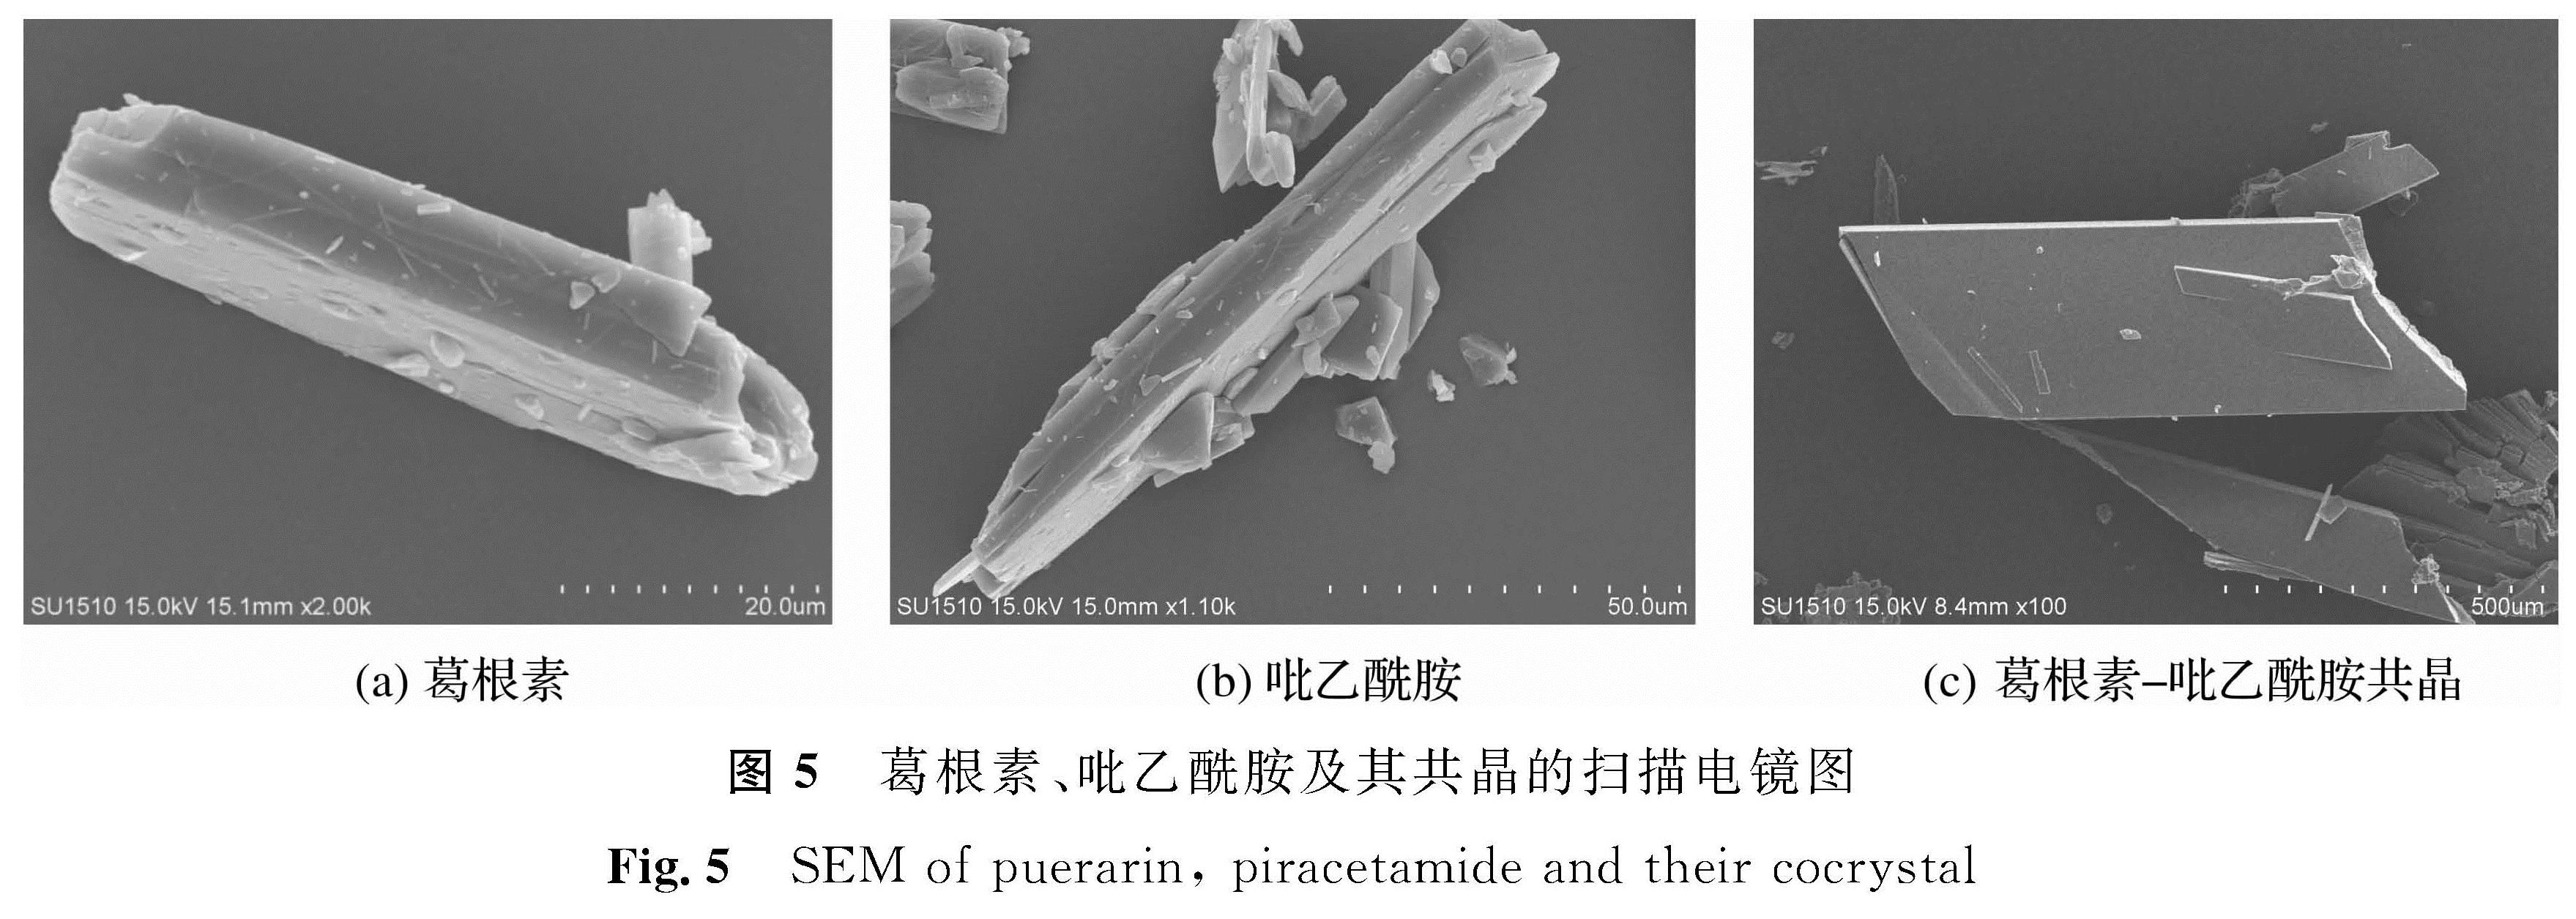 图5 葛根素、吡乙酰胺及其共晶的扫描电镜图<br/>Fig.5 SEM of puerarin, piracetamide and their cocrystal